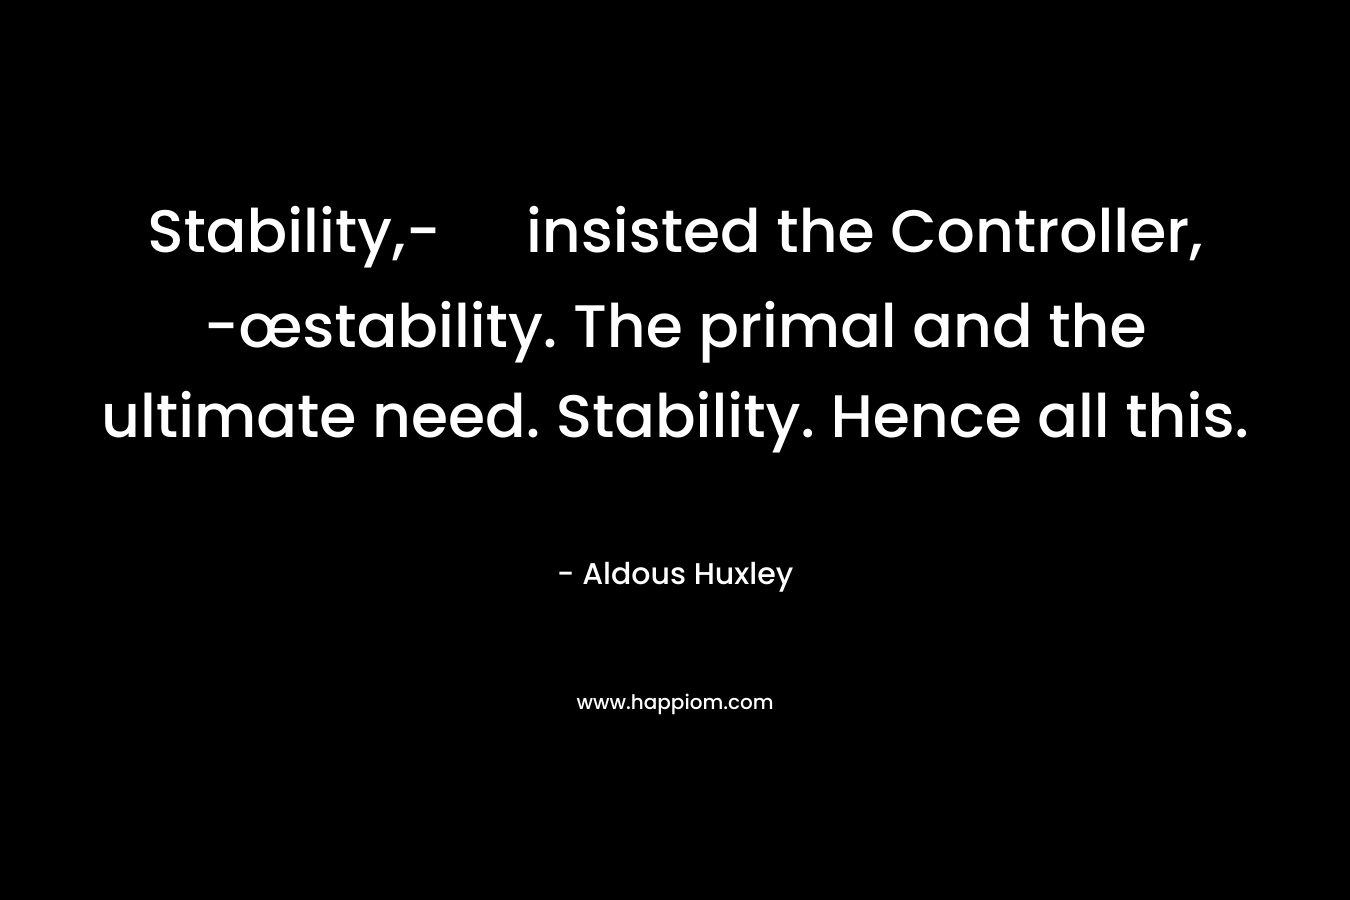 Stability,- insisted the Controller, -œstability. The primal and the ultimate need. Stability. Hence all this. – Aldous Huxley